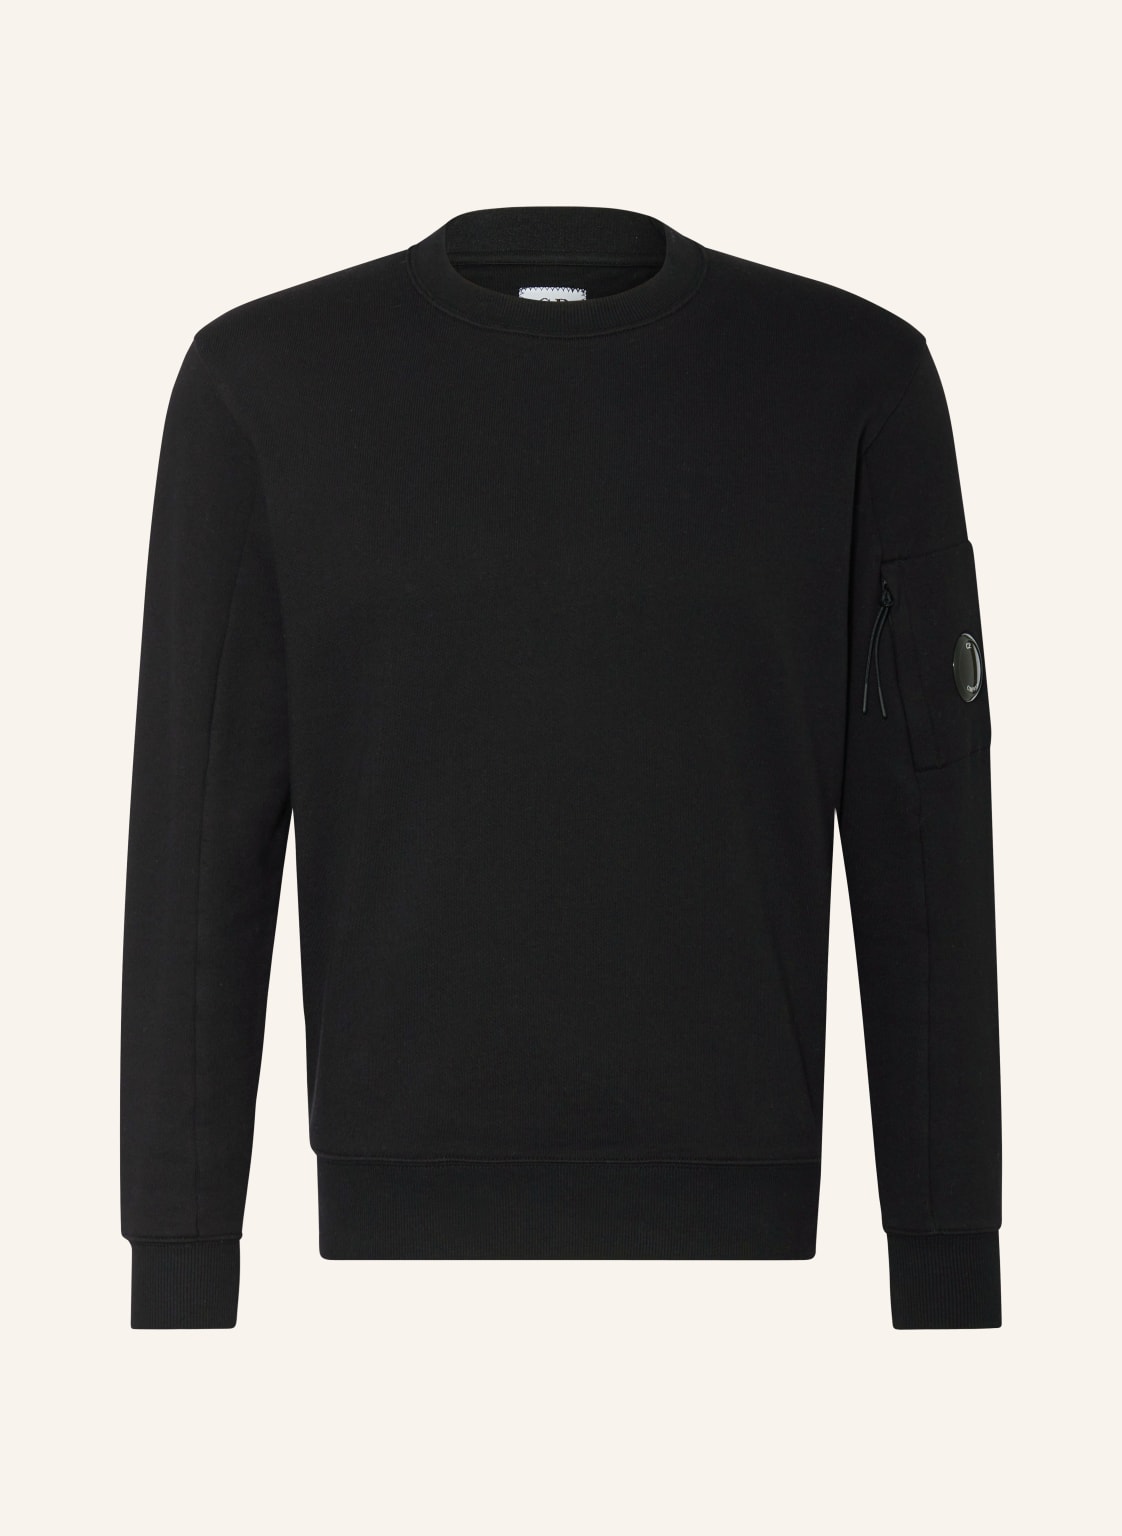 C.P. Company Sweatshirt schwarz von C.P. Company